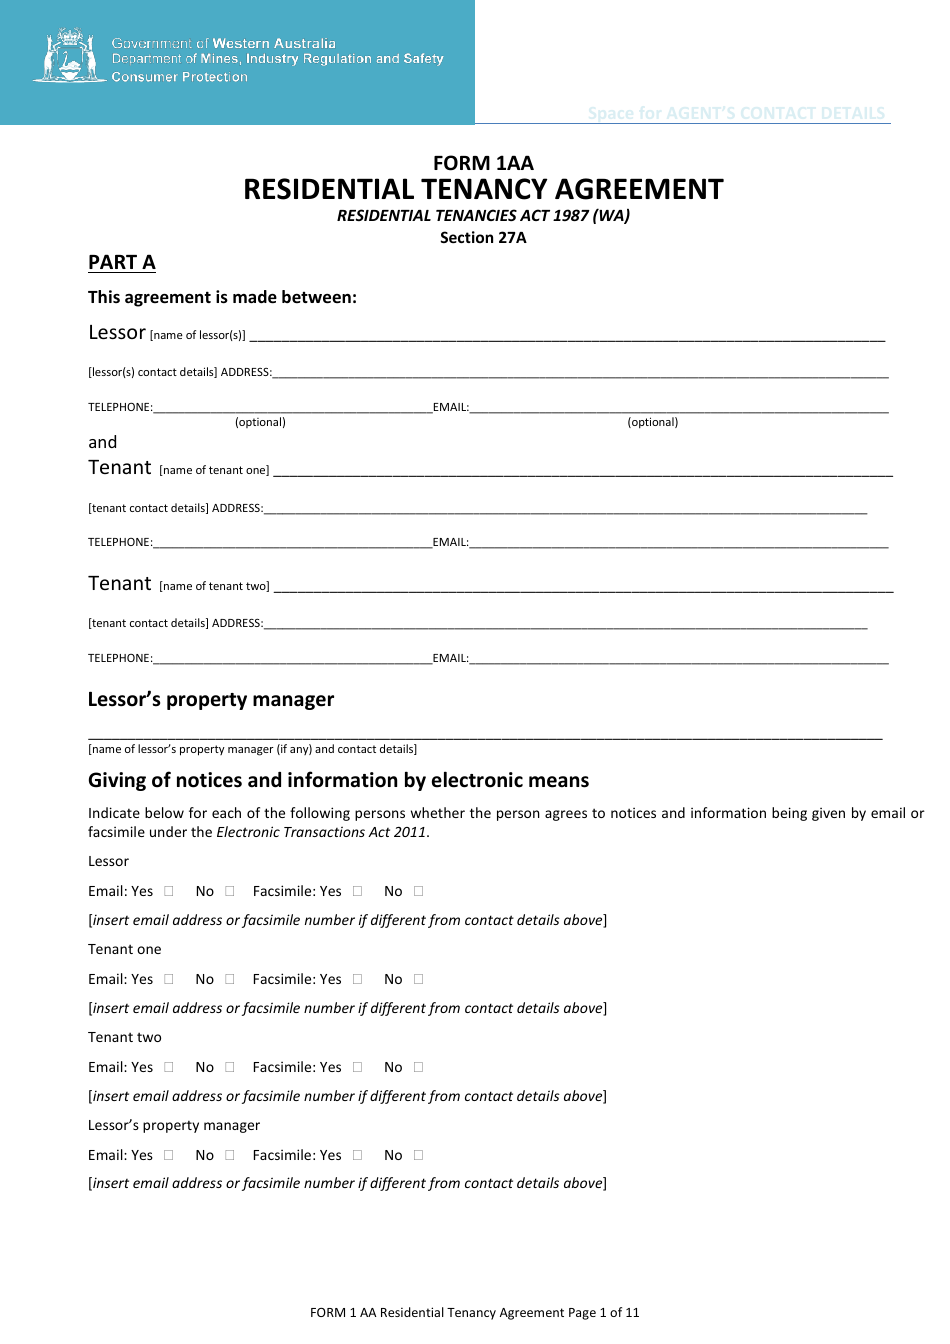 Form 1AA Residential Tenancy Agreement - Western Australia, Australia, Page 1